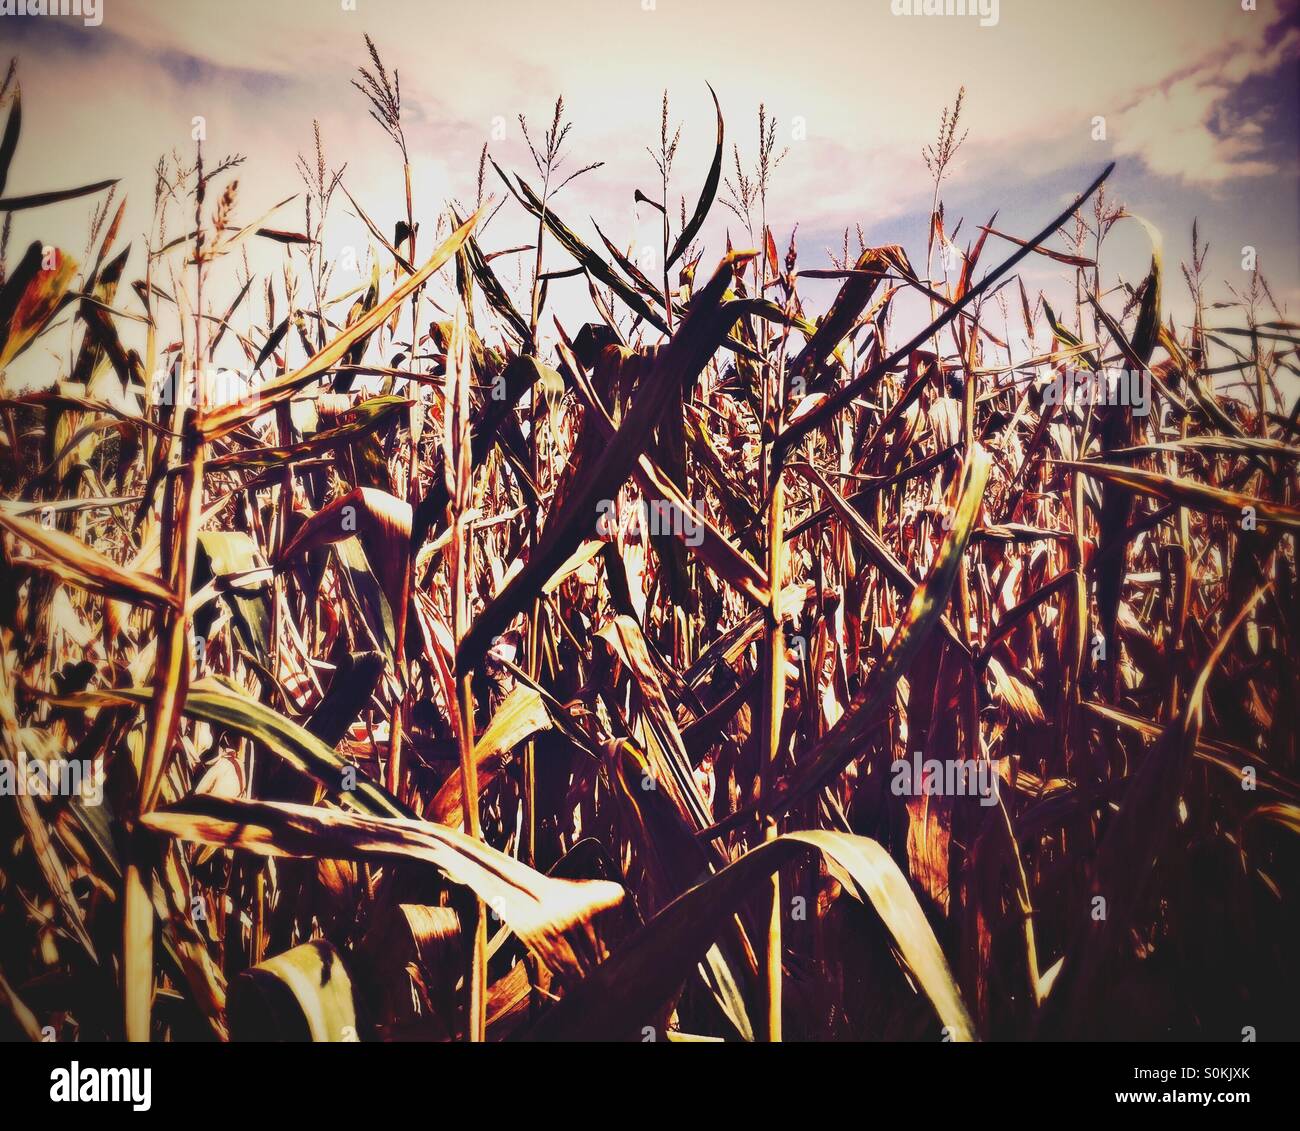 Corn stalks against a cloudy blue sky Stock Photo